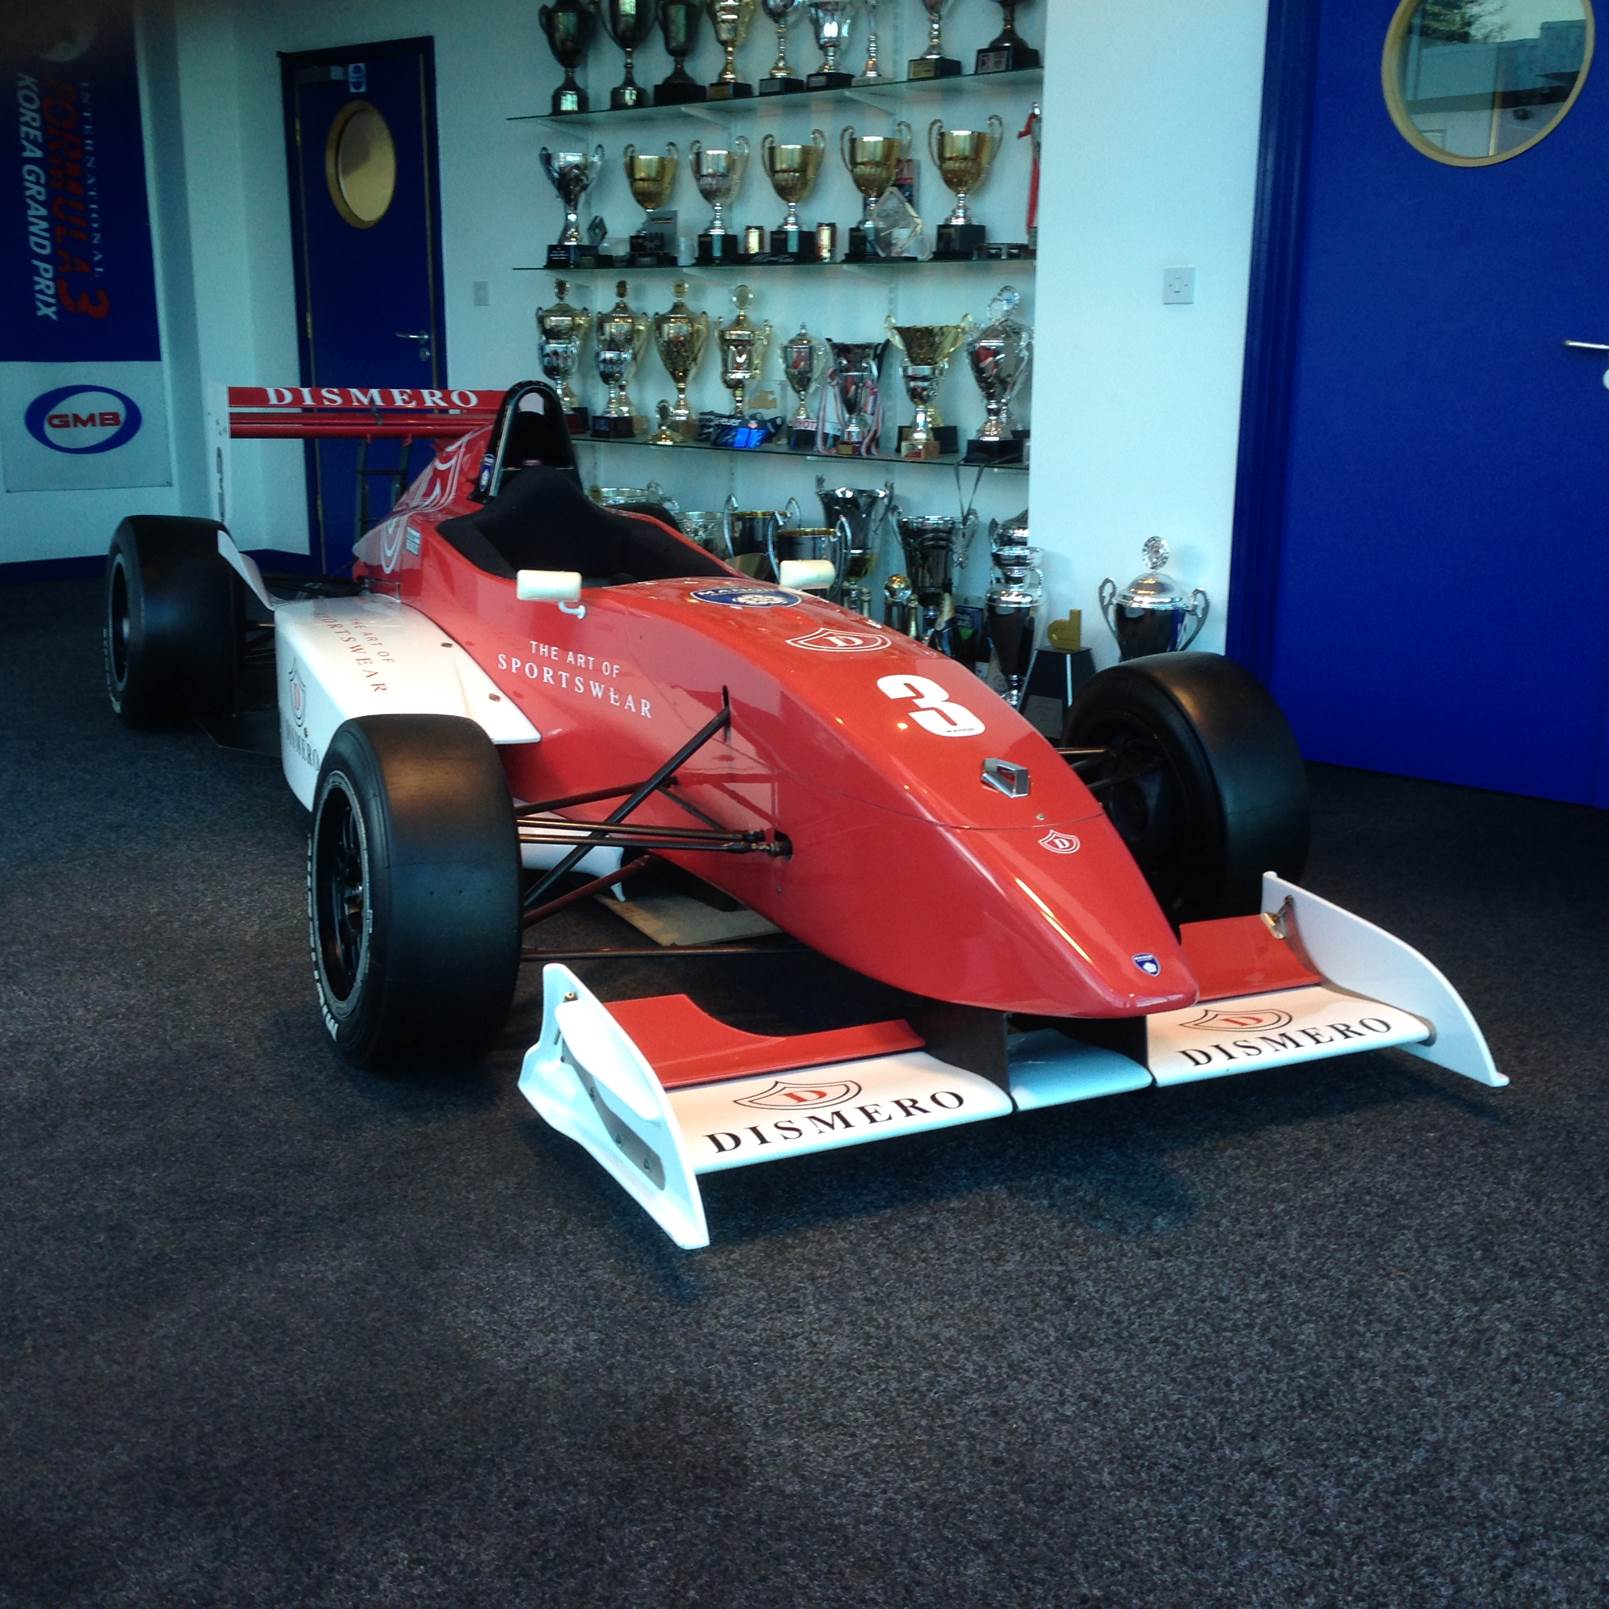 Formula One star Kimi Raikkonen’s 2000 Tatuus Formula Renault to be auctioned at no reserve